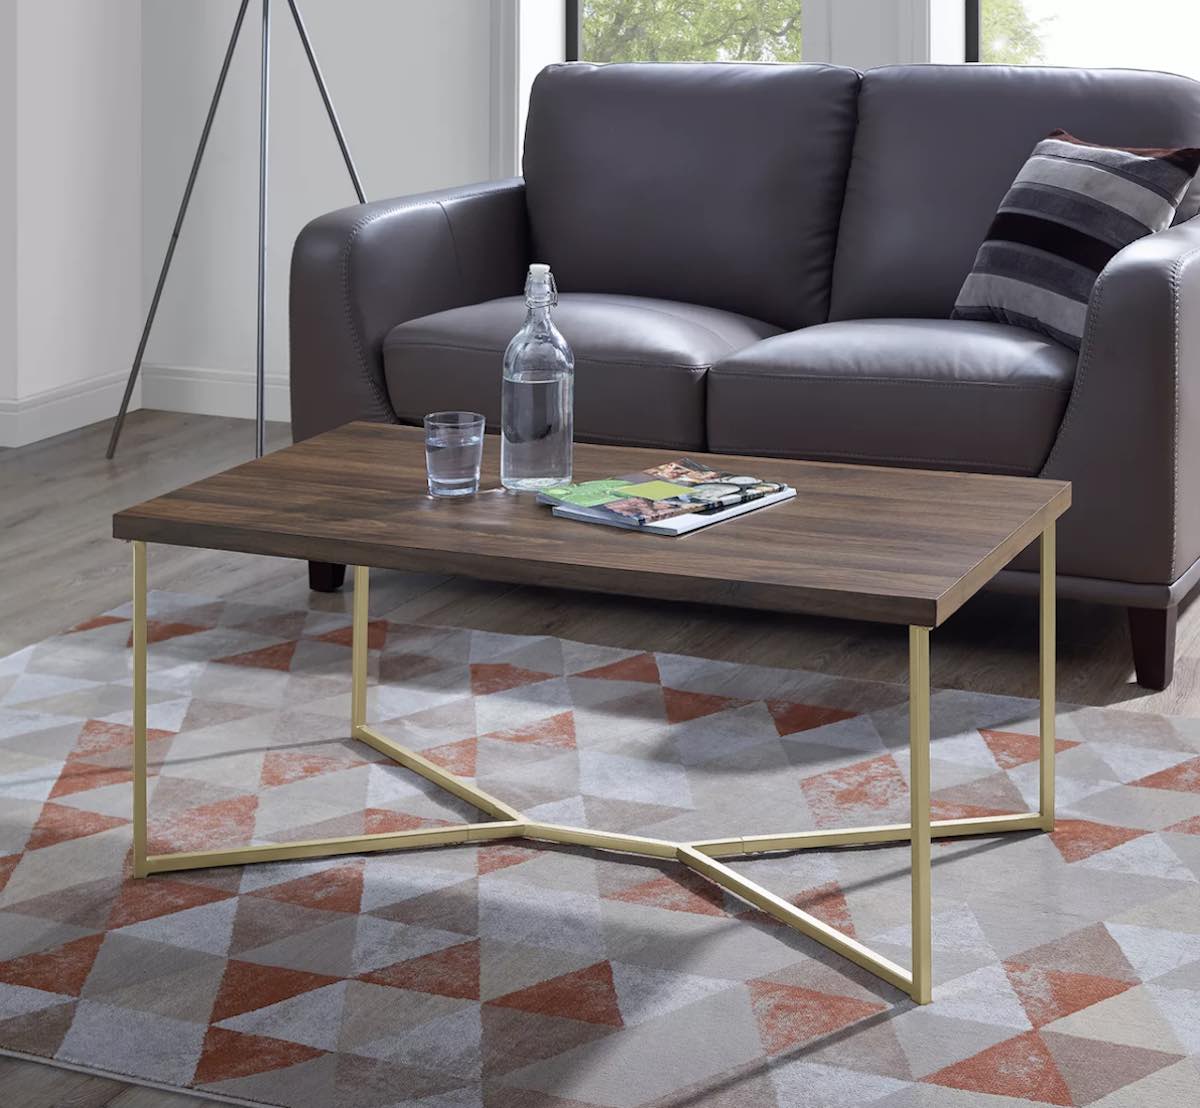 Saracina Home Glam Mid Century Modern Y Leg Rectangle Coffee Table - Dark Walnut/Gold in living room